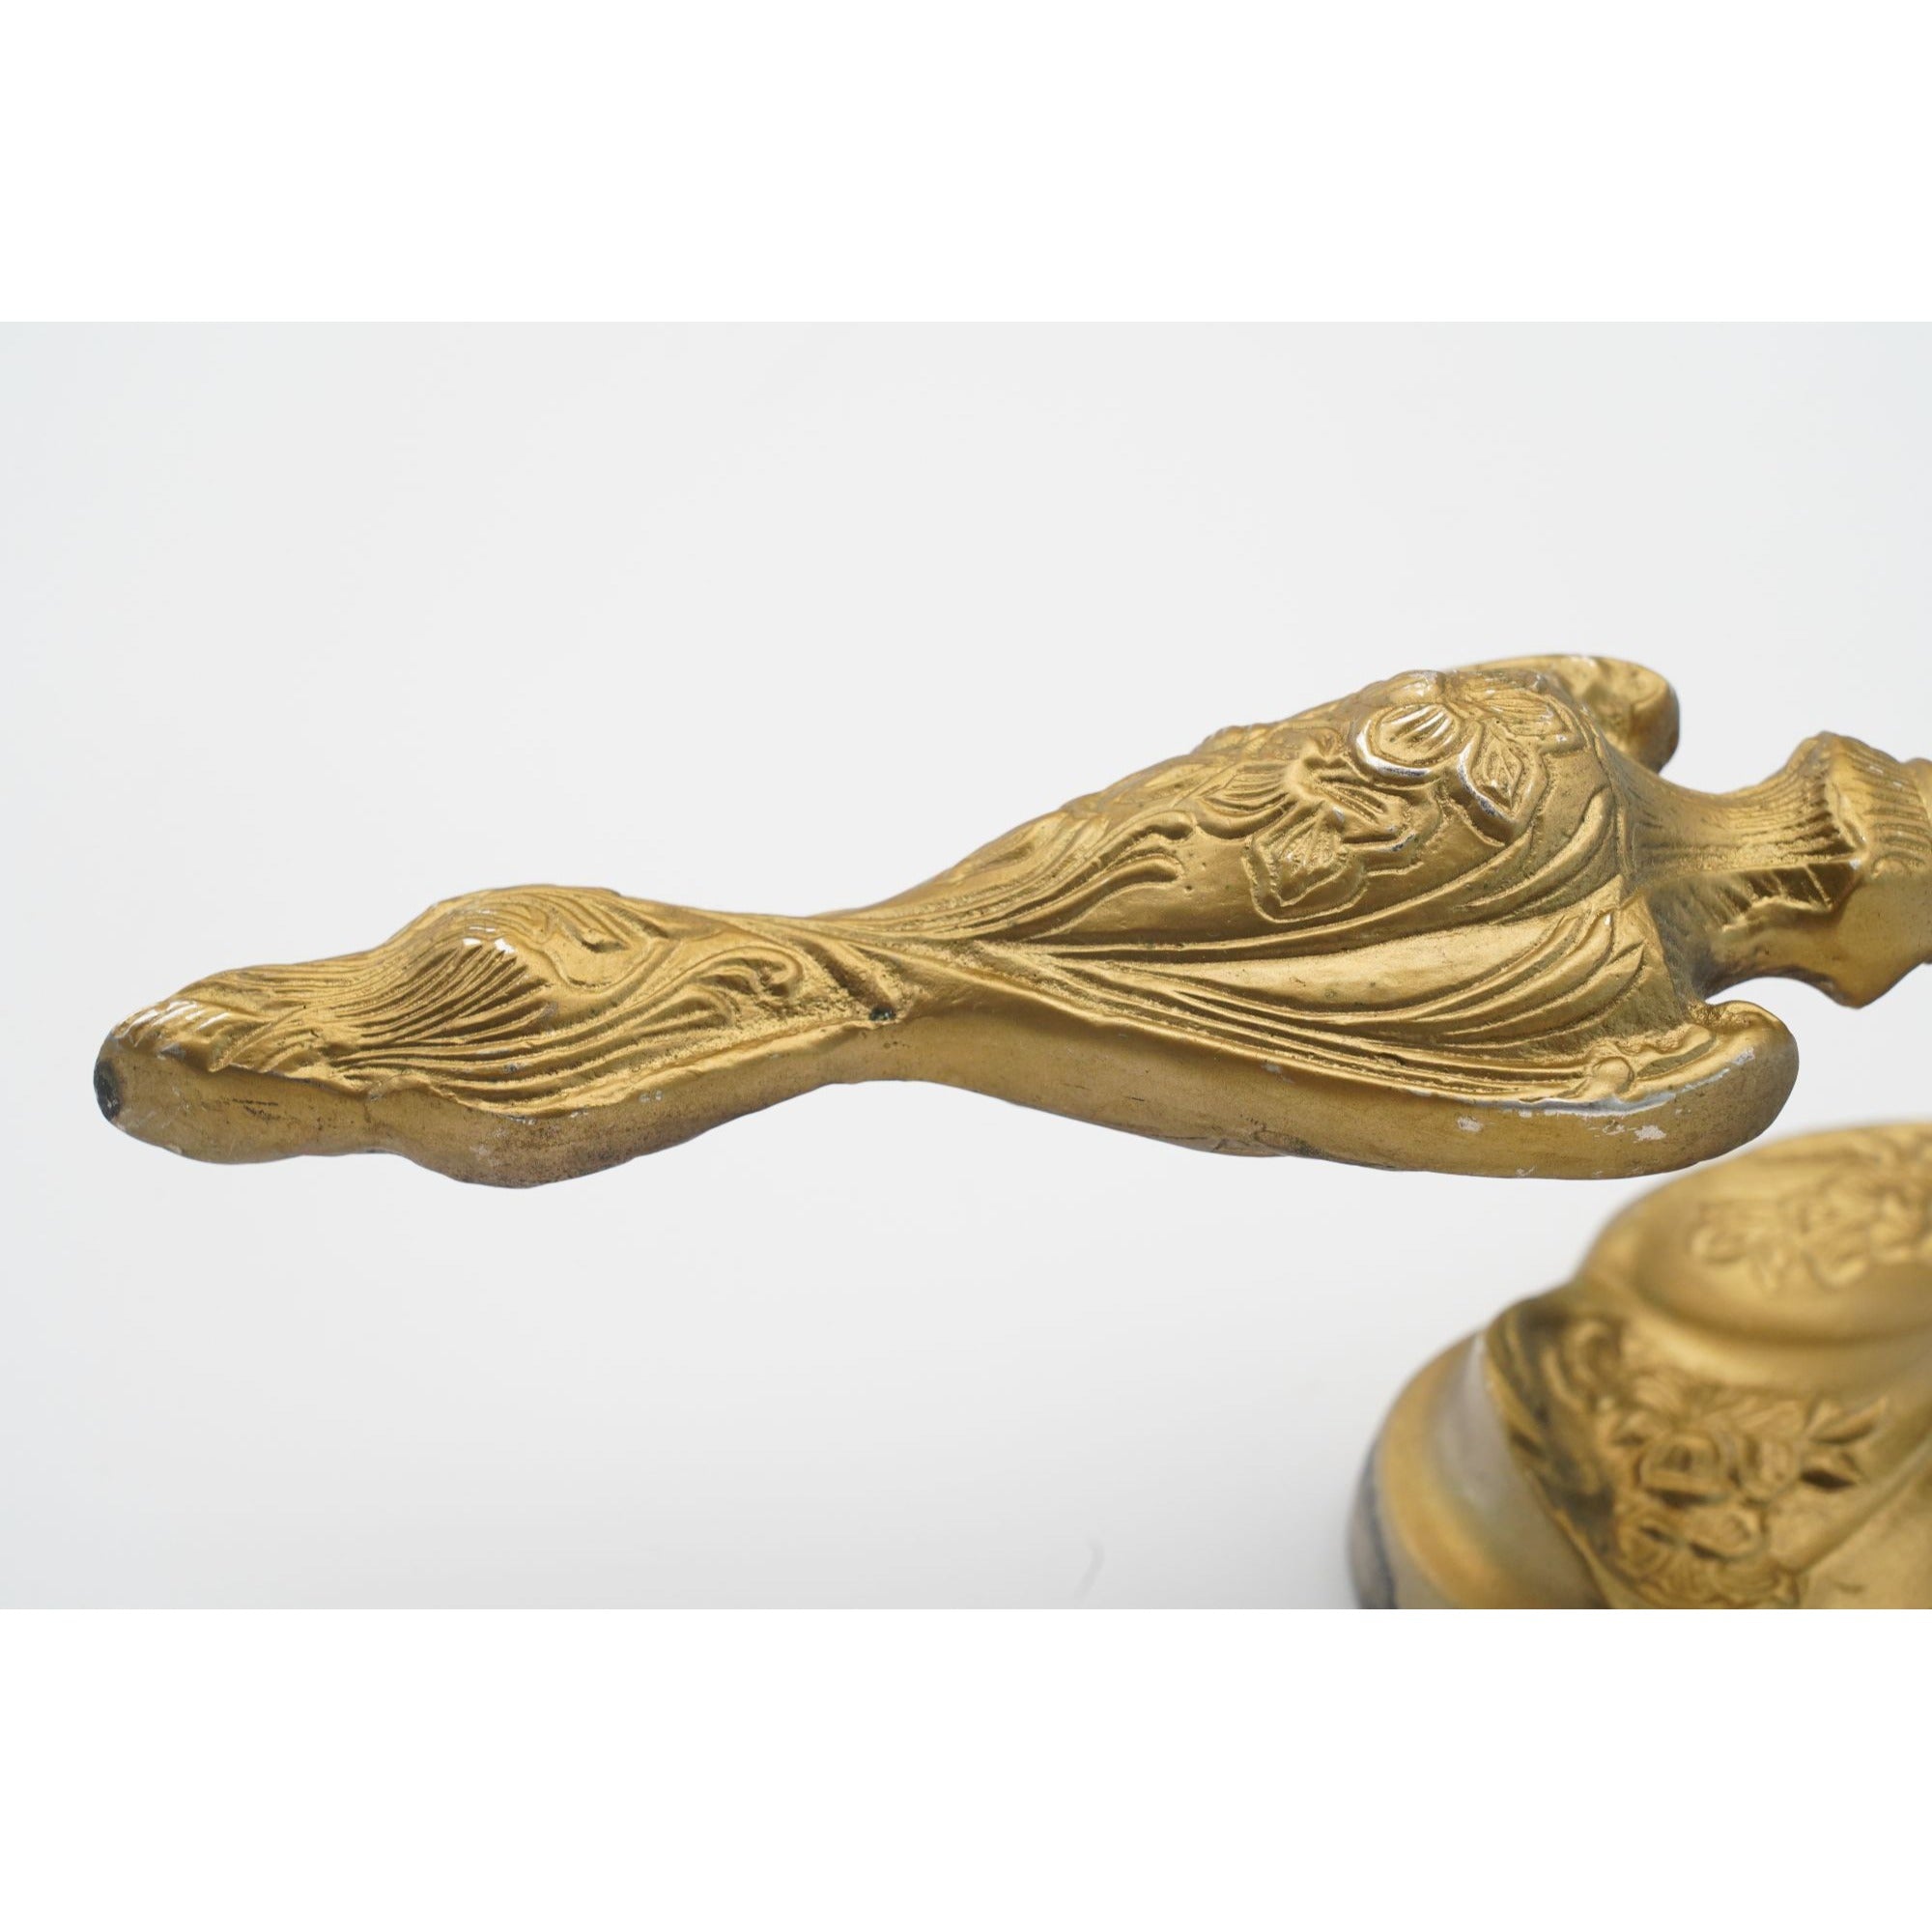 Vintage Ornate Brass Metal Wall Hanging Sconce Candle Holder 9.25”